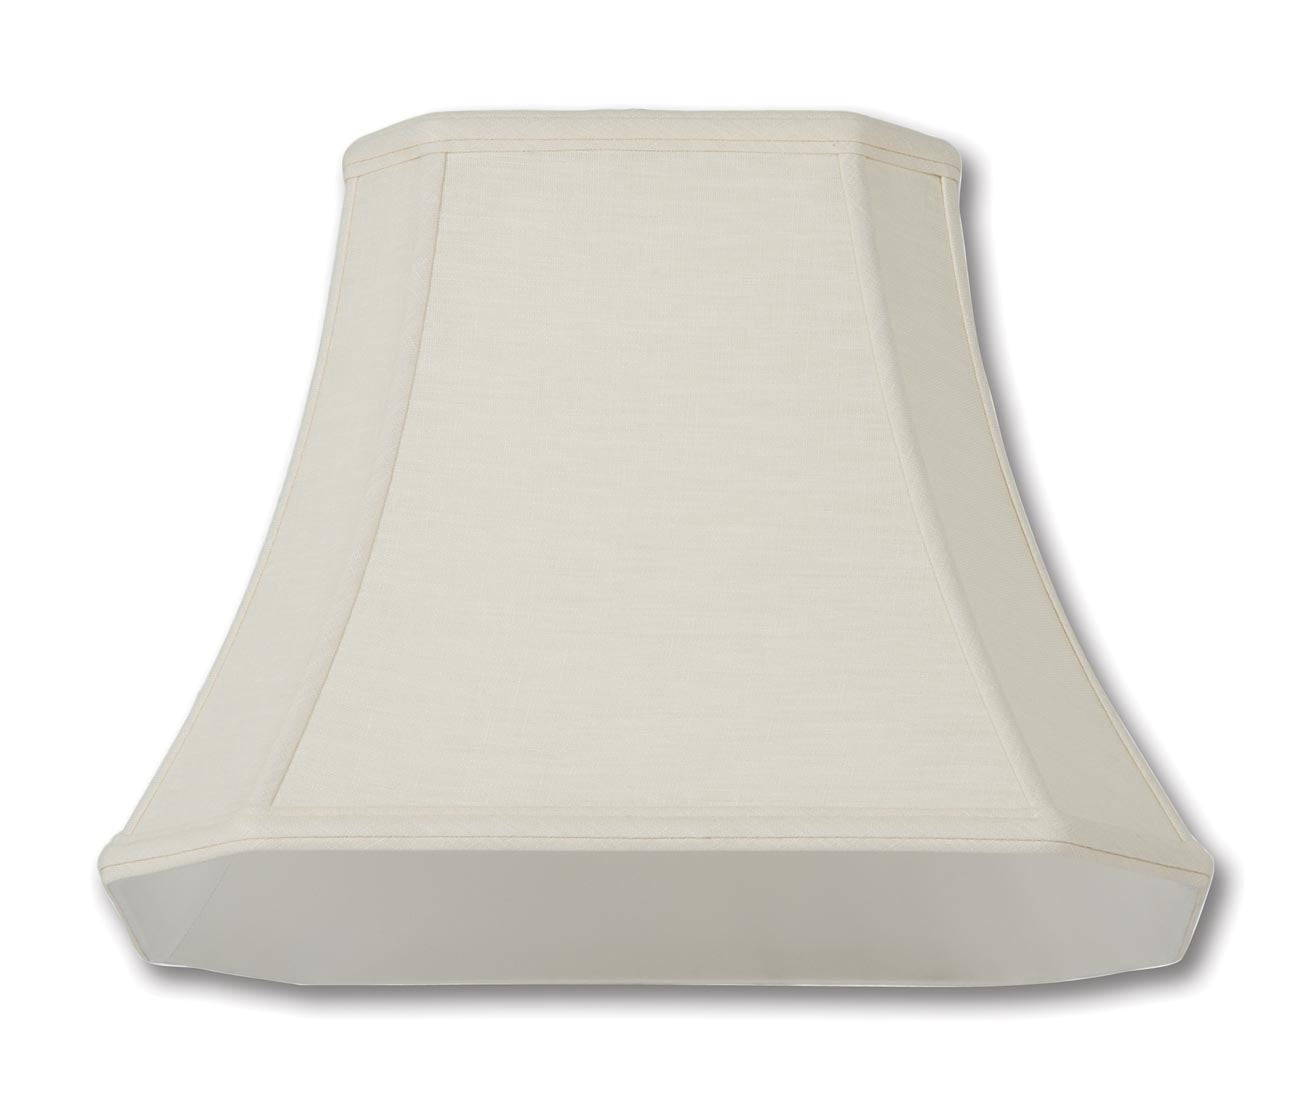 Cut Corner Rectangle Lamp Shades - Natural Color, 100% Fine Linen